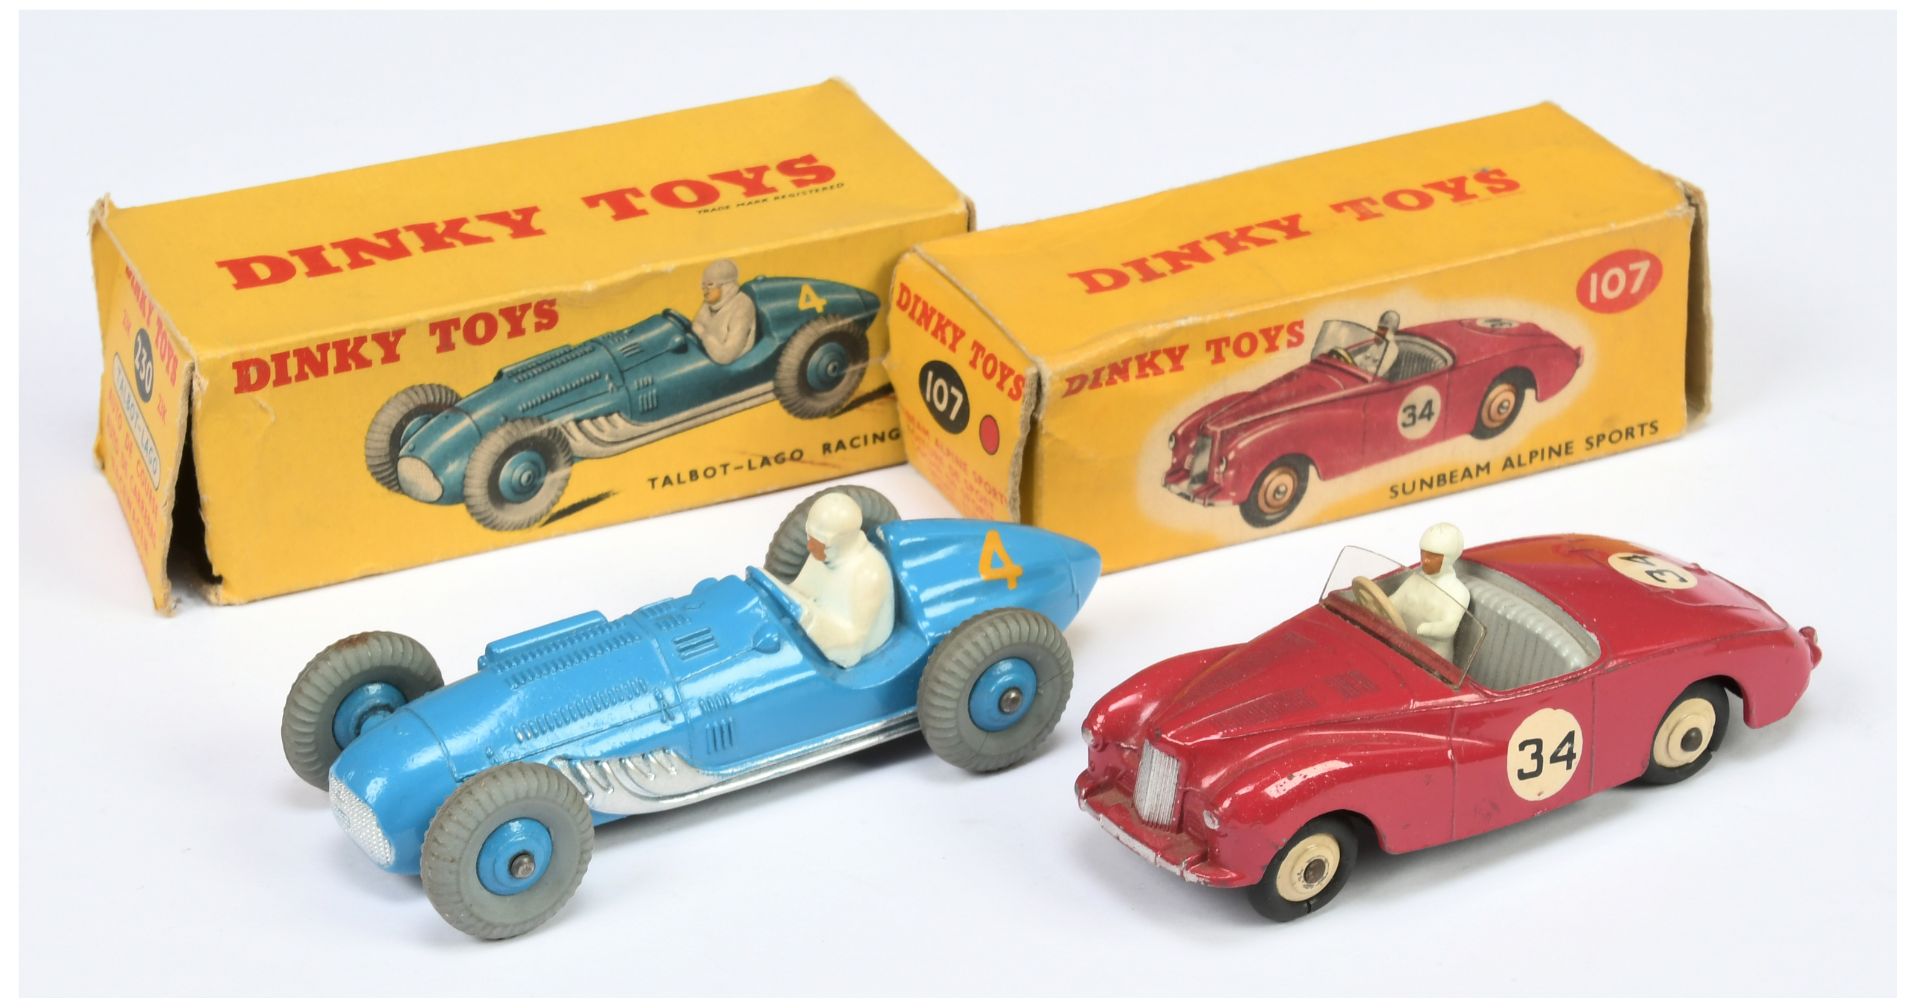 Dinky Toys 107 Austin Alpine Sports Car - Cerise body, grey interior, silver trim, light beige ri...